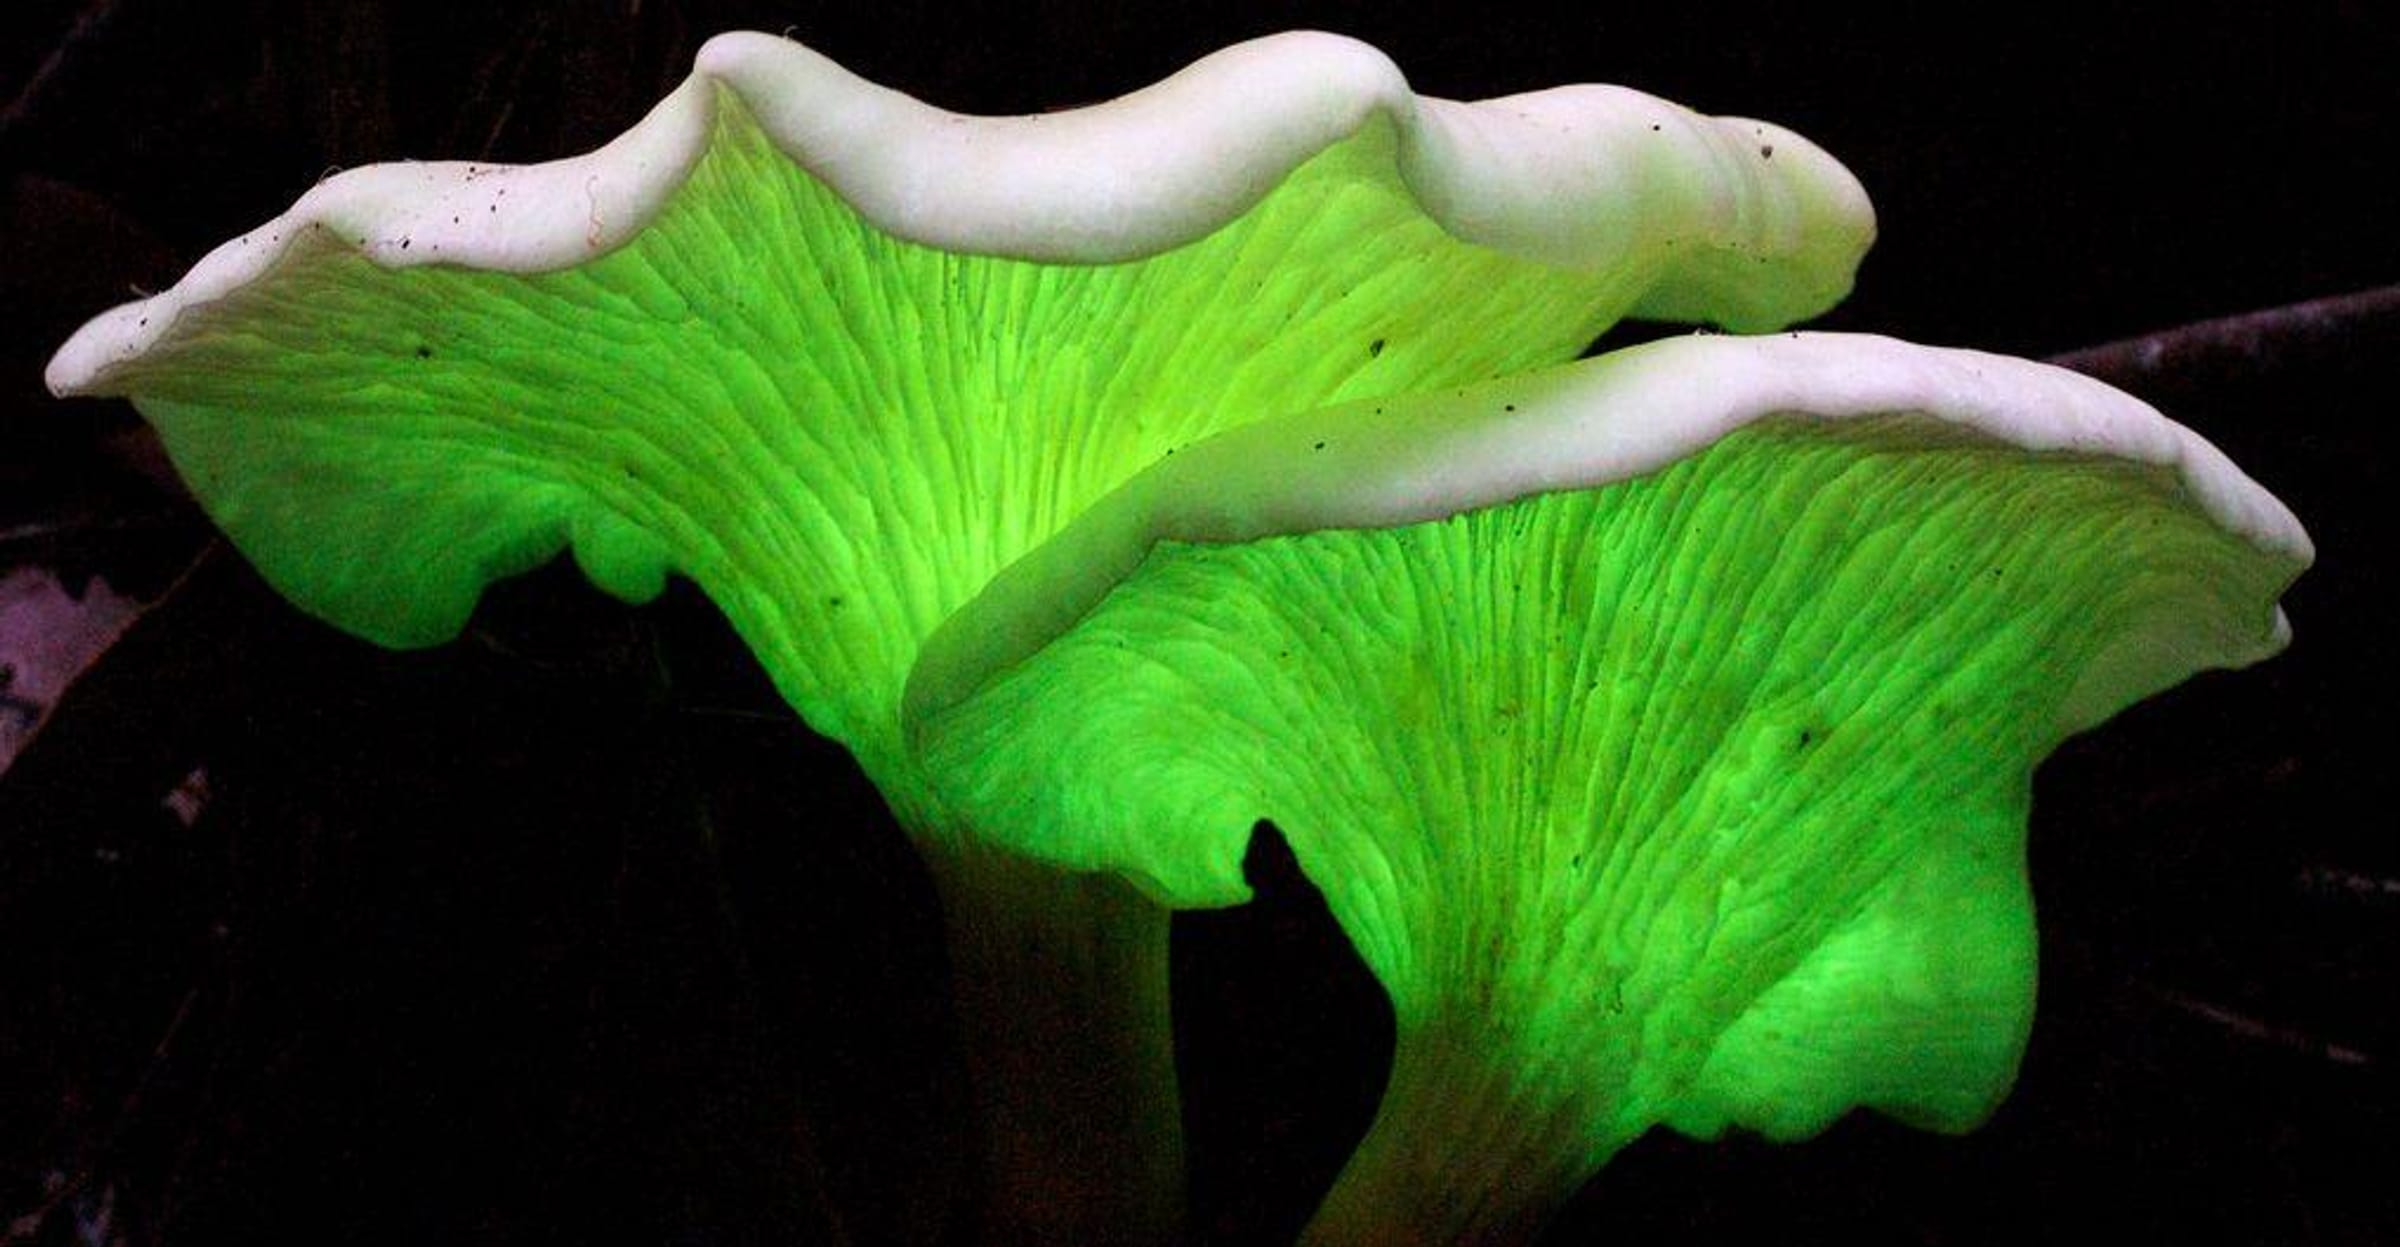 bioluminescent plants and animals